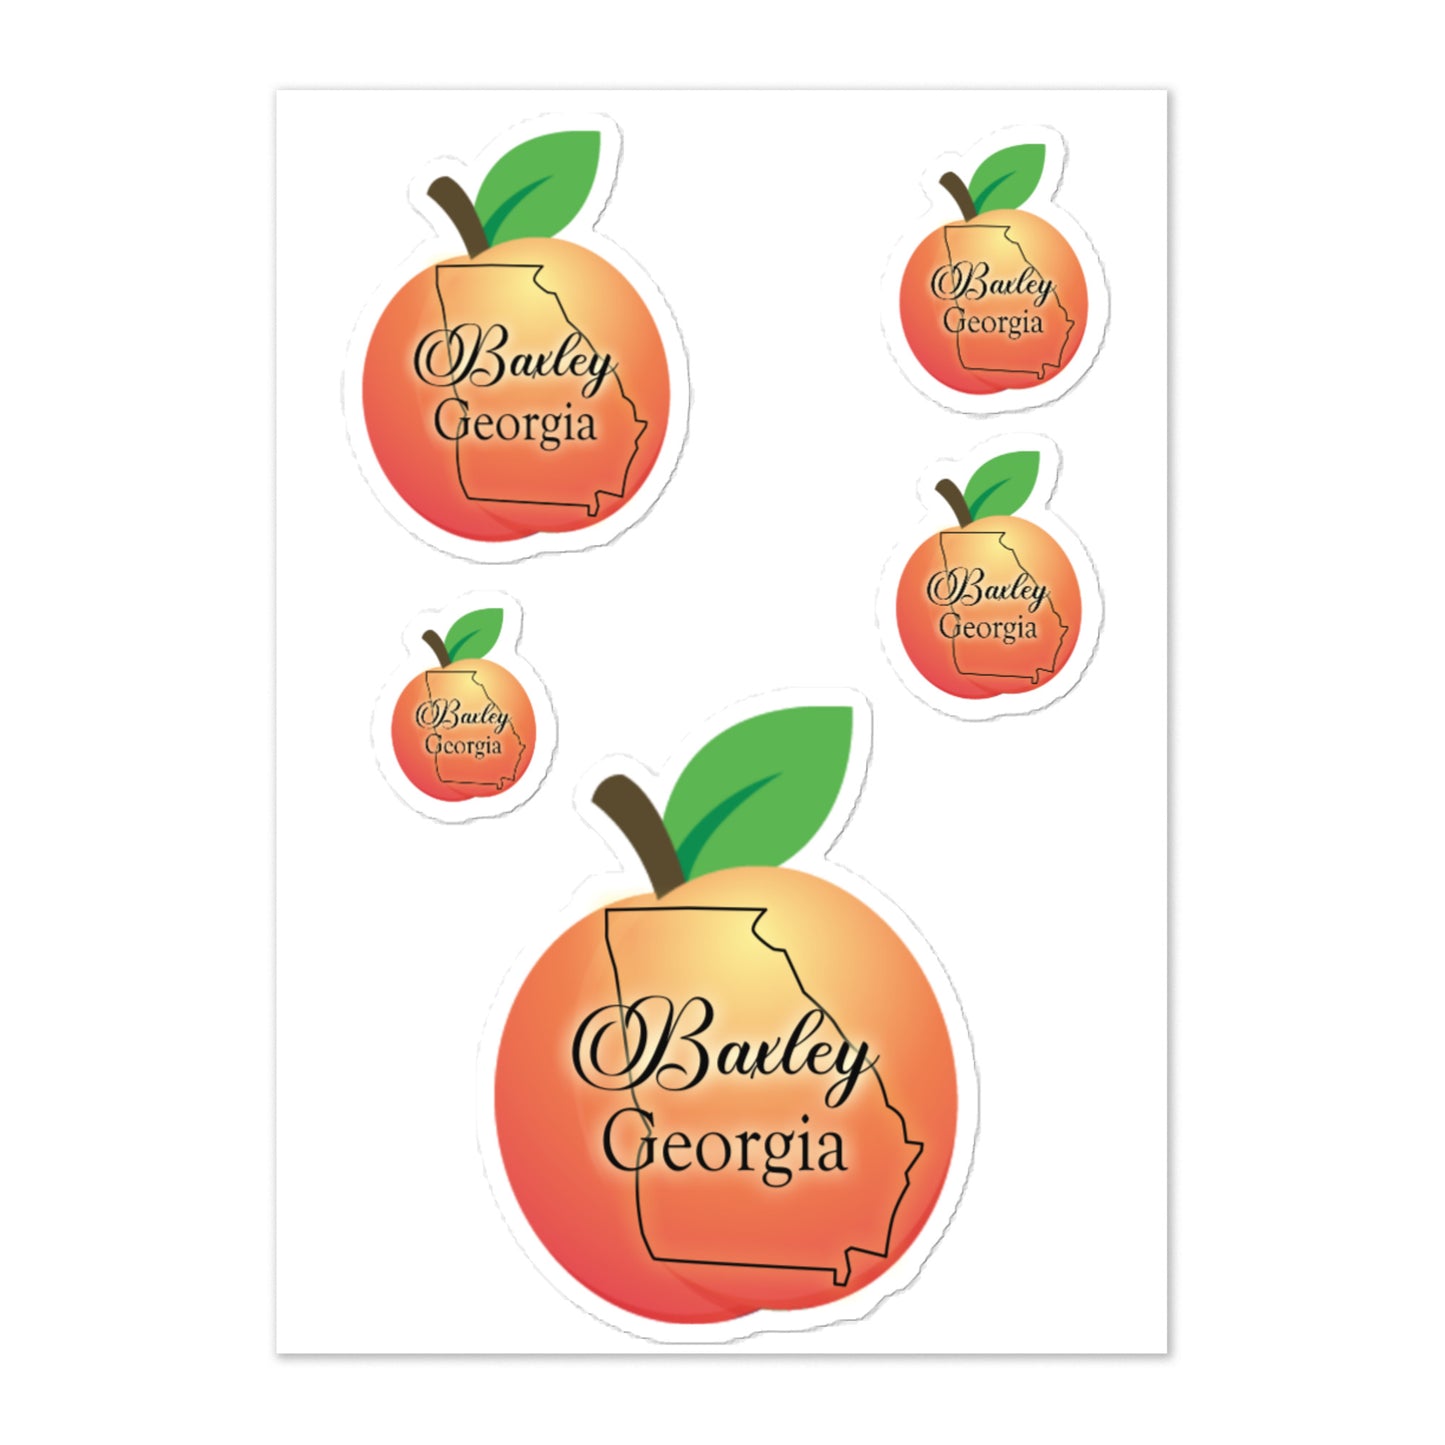 Baxley Georgia - State Outline Sticker Sheet Sticker Sheet